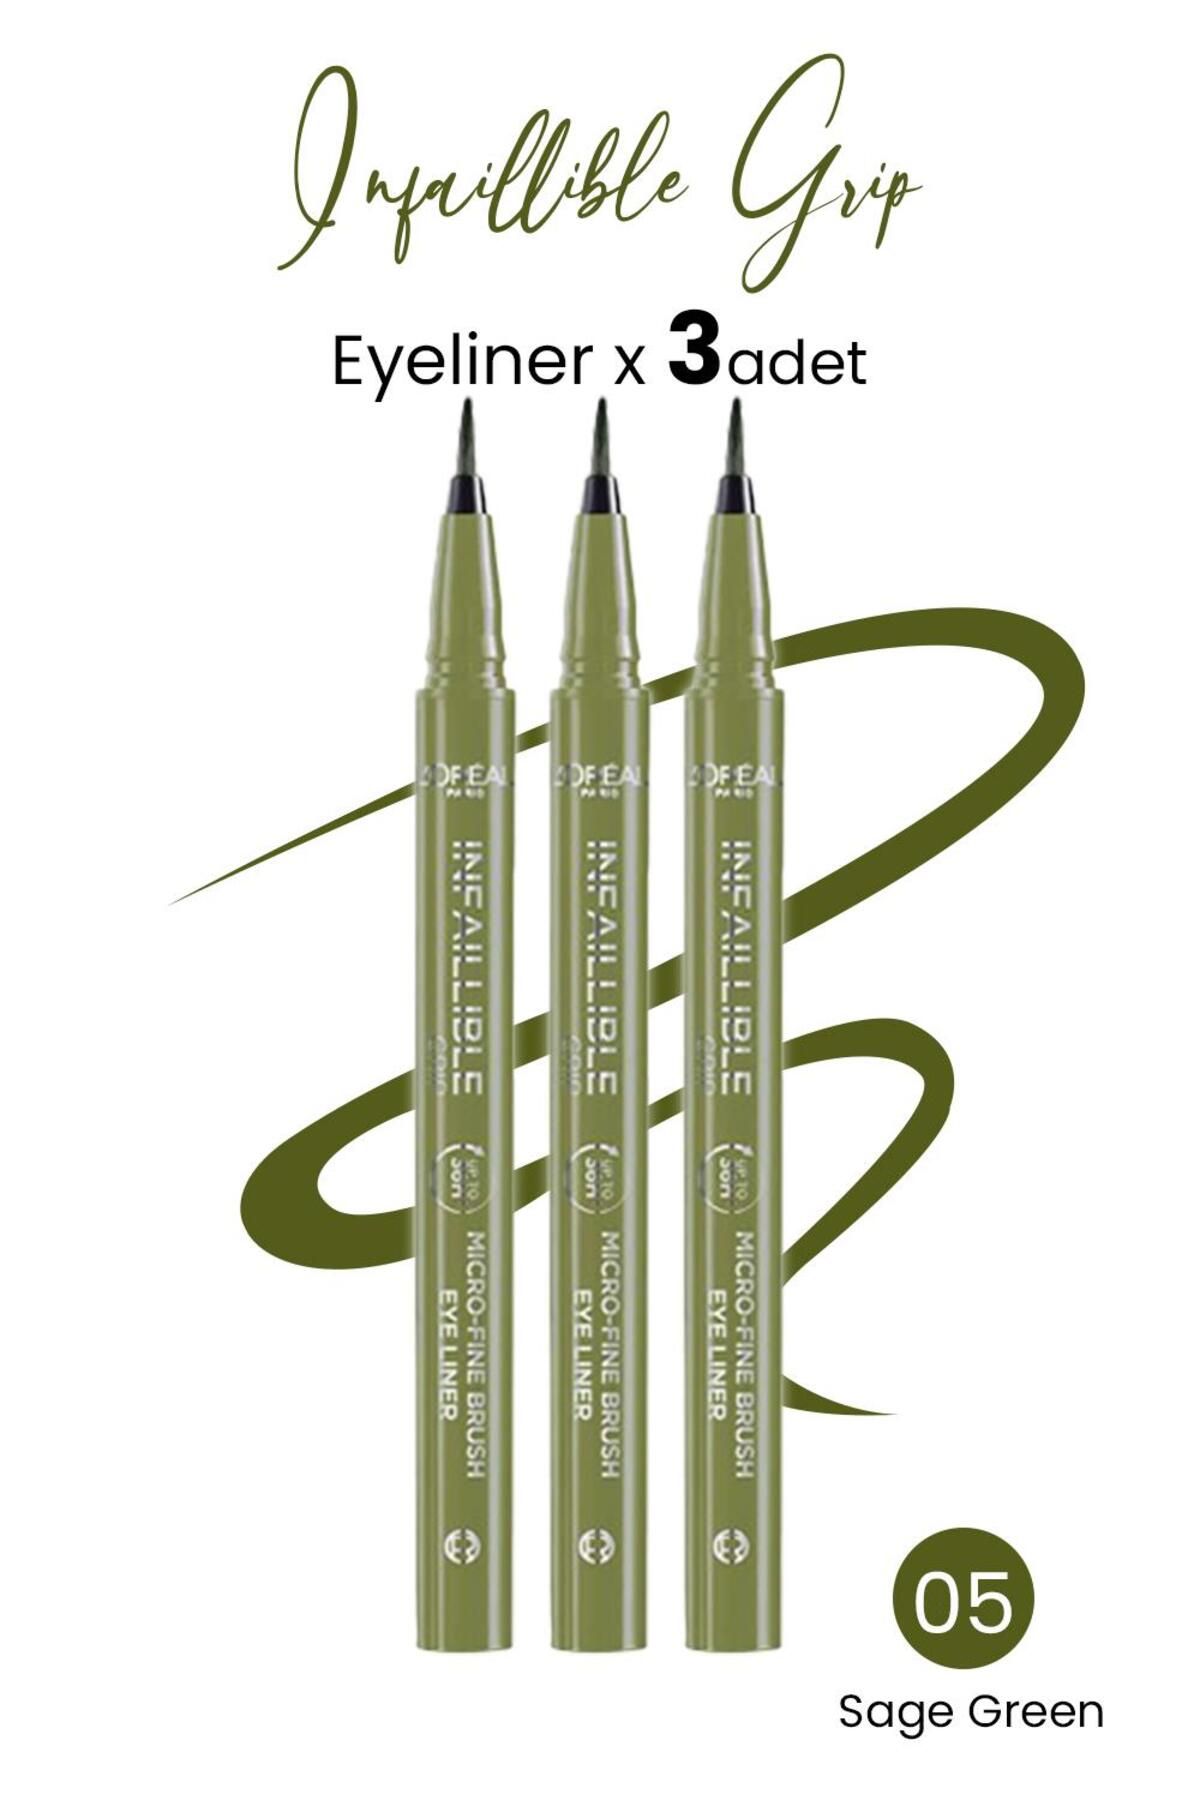 L'Oreal Paris Infaillible Grip Eyeliner 05 Sage Green X 3 Adet